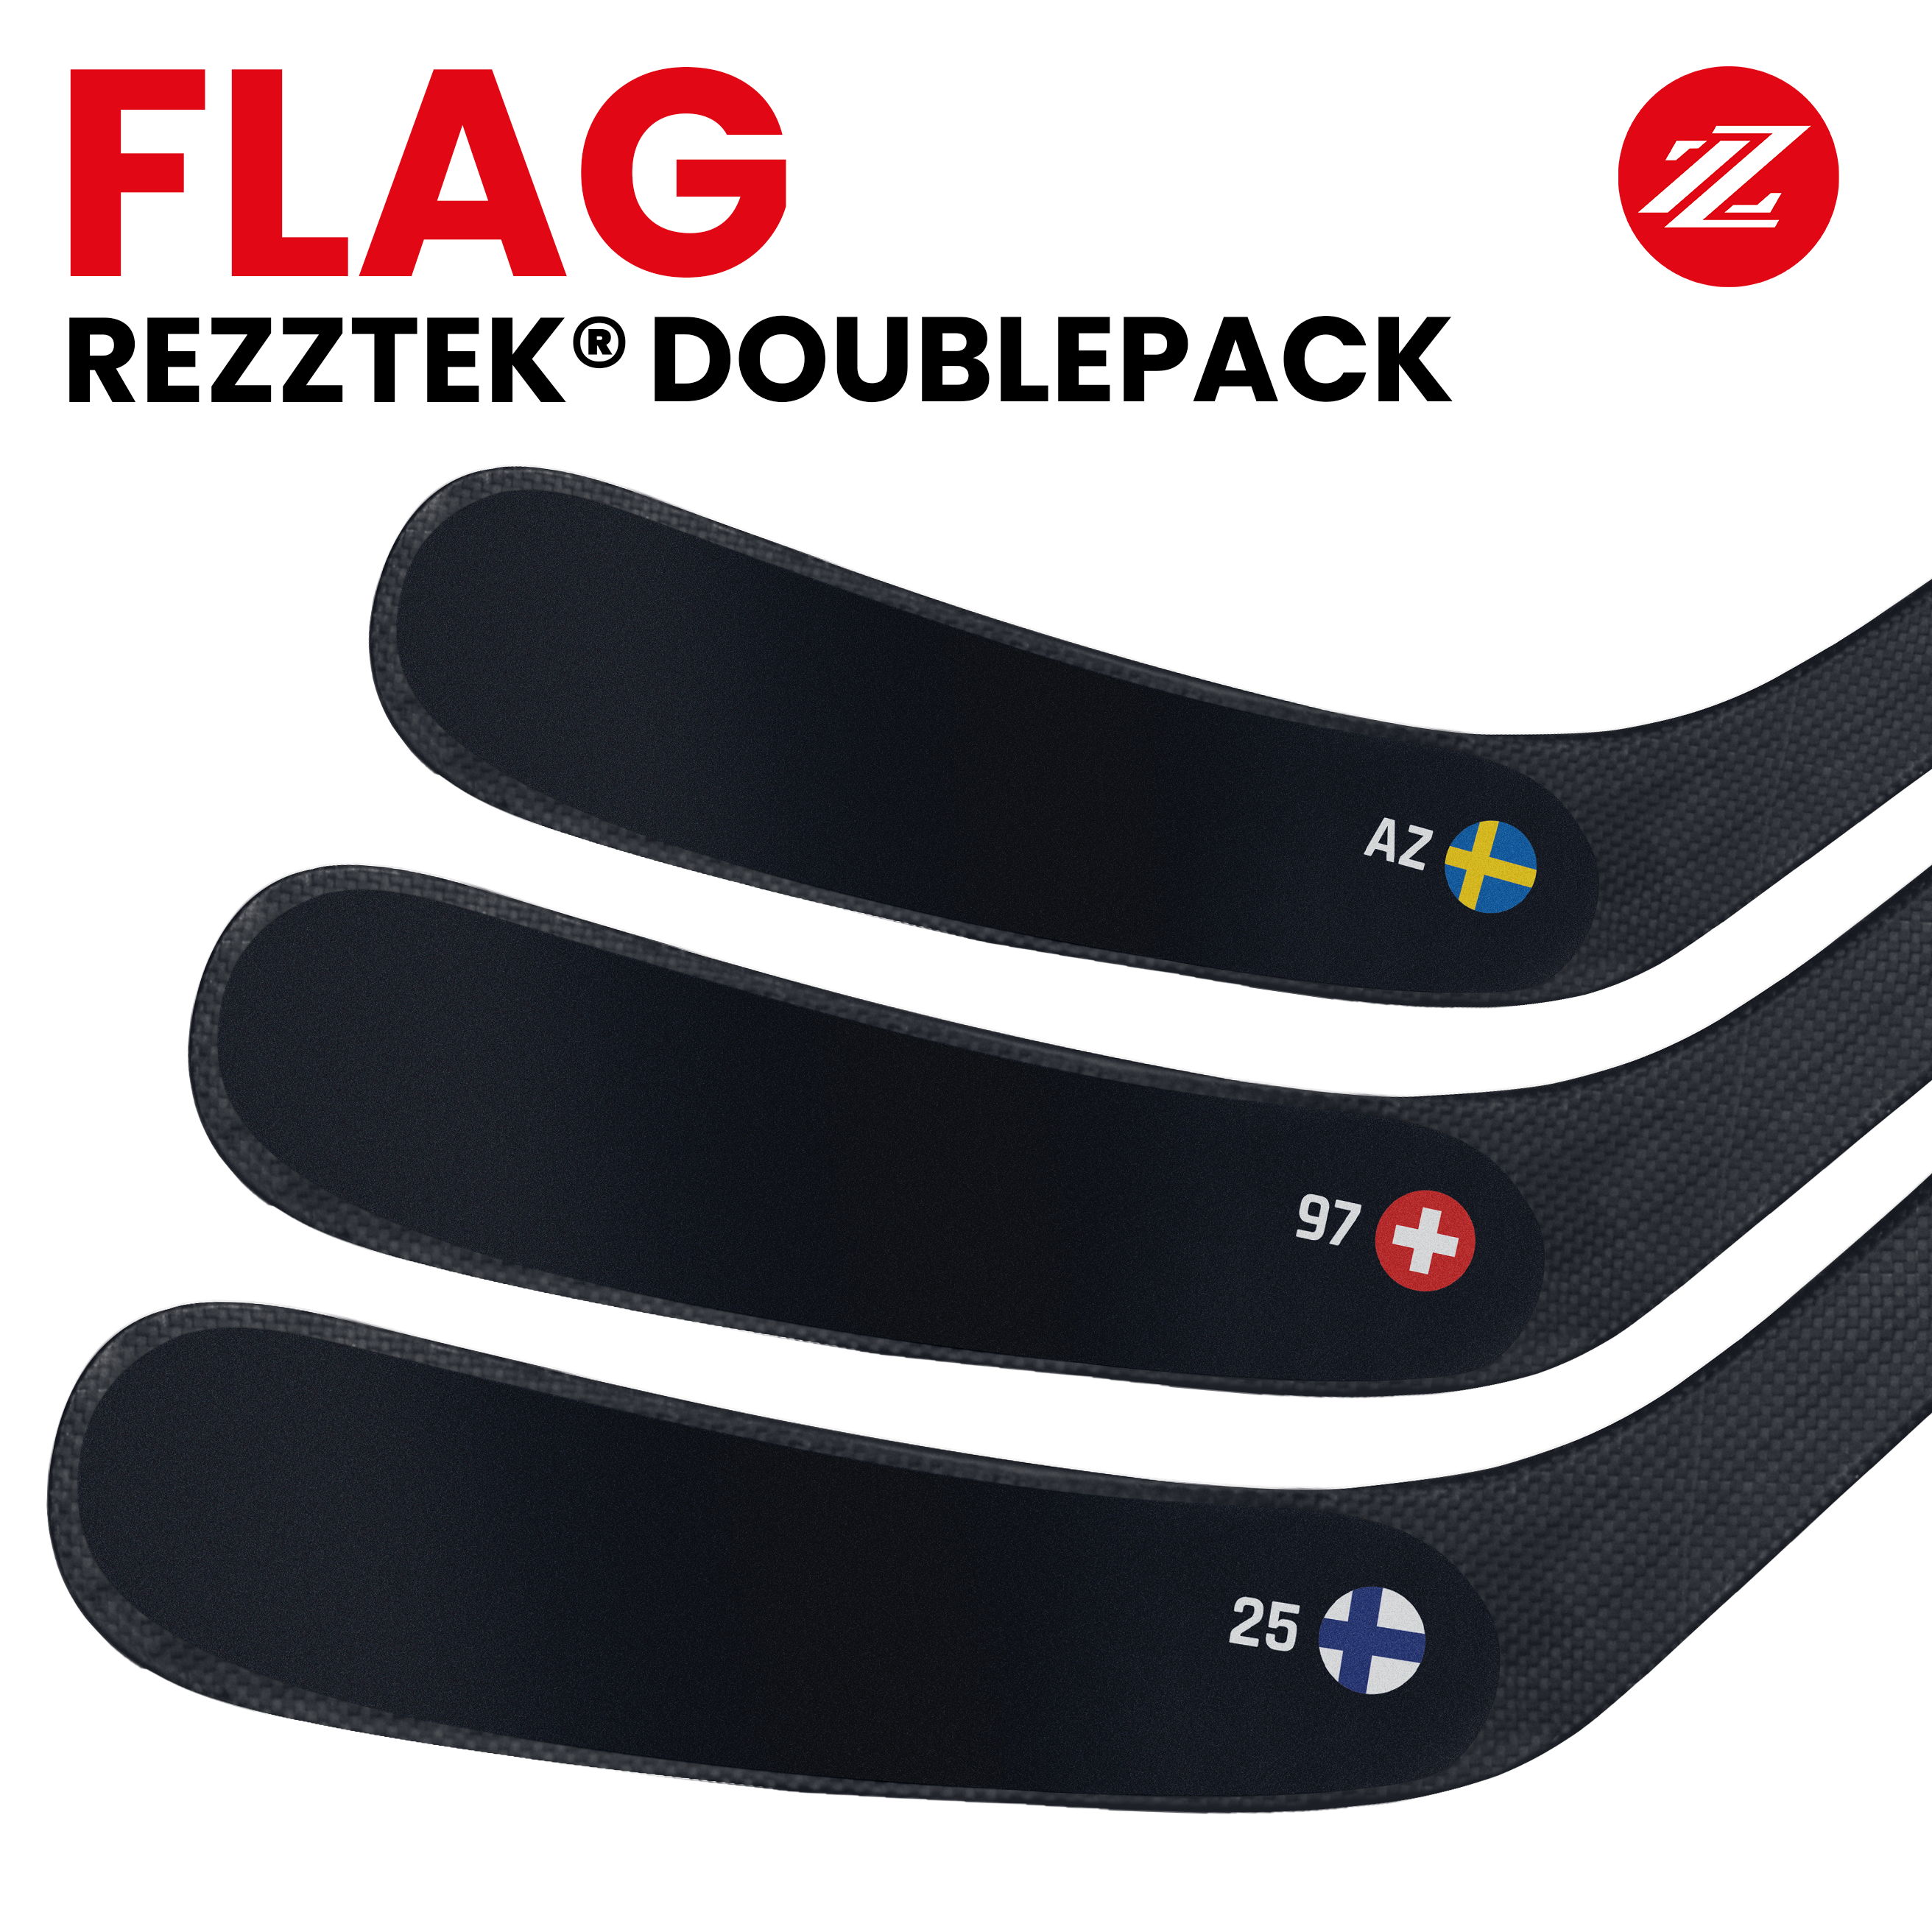 Flag Rezztek® Doublepack Blade Grip